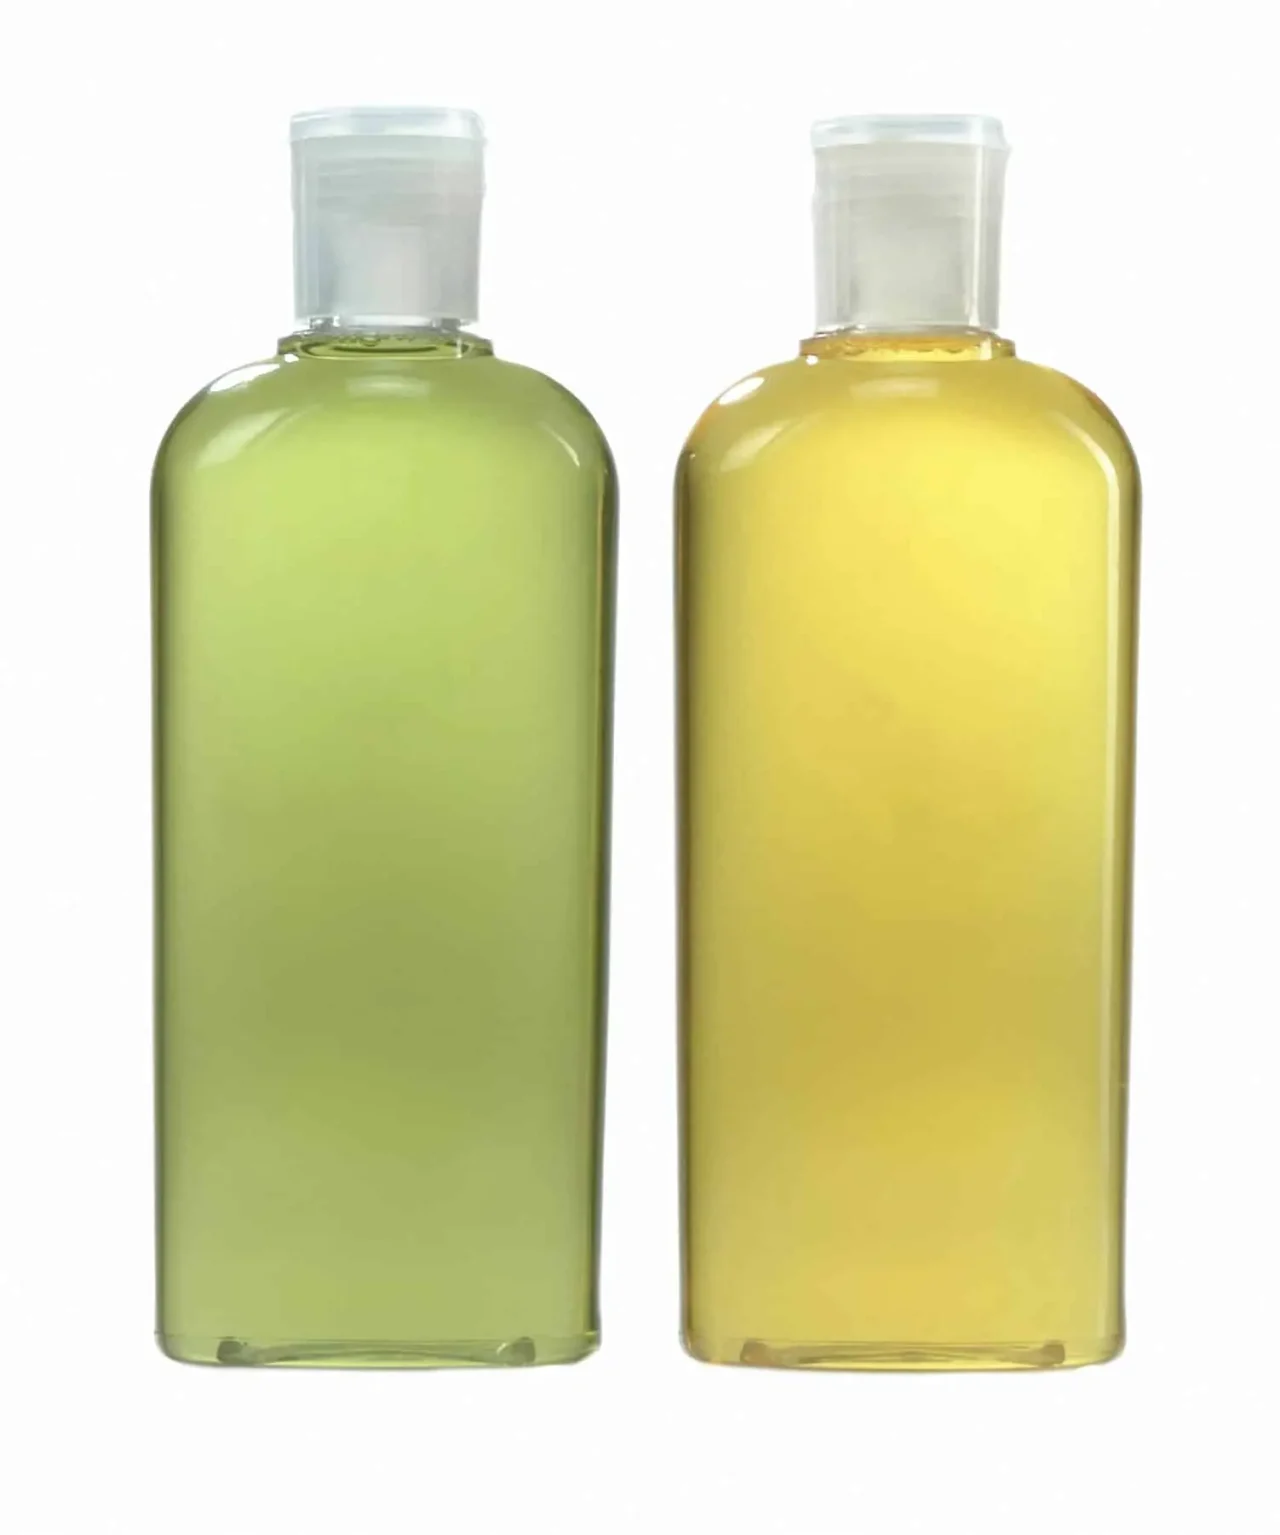 Clarifying shampoo vs. Regular shampoo